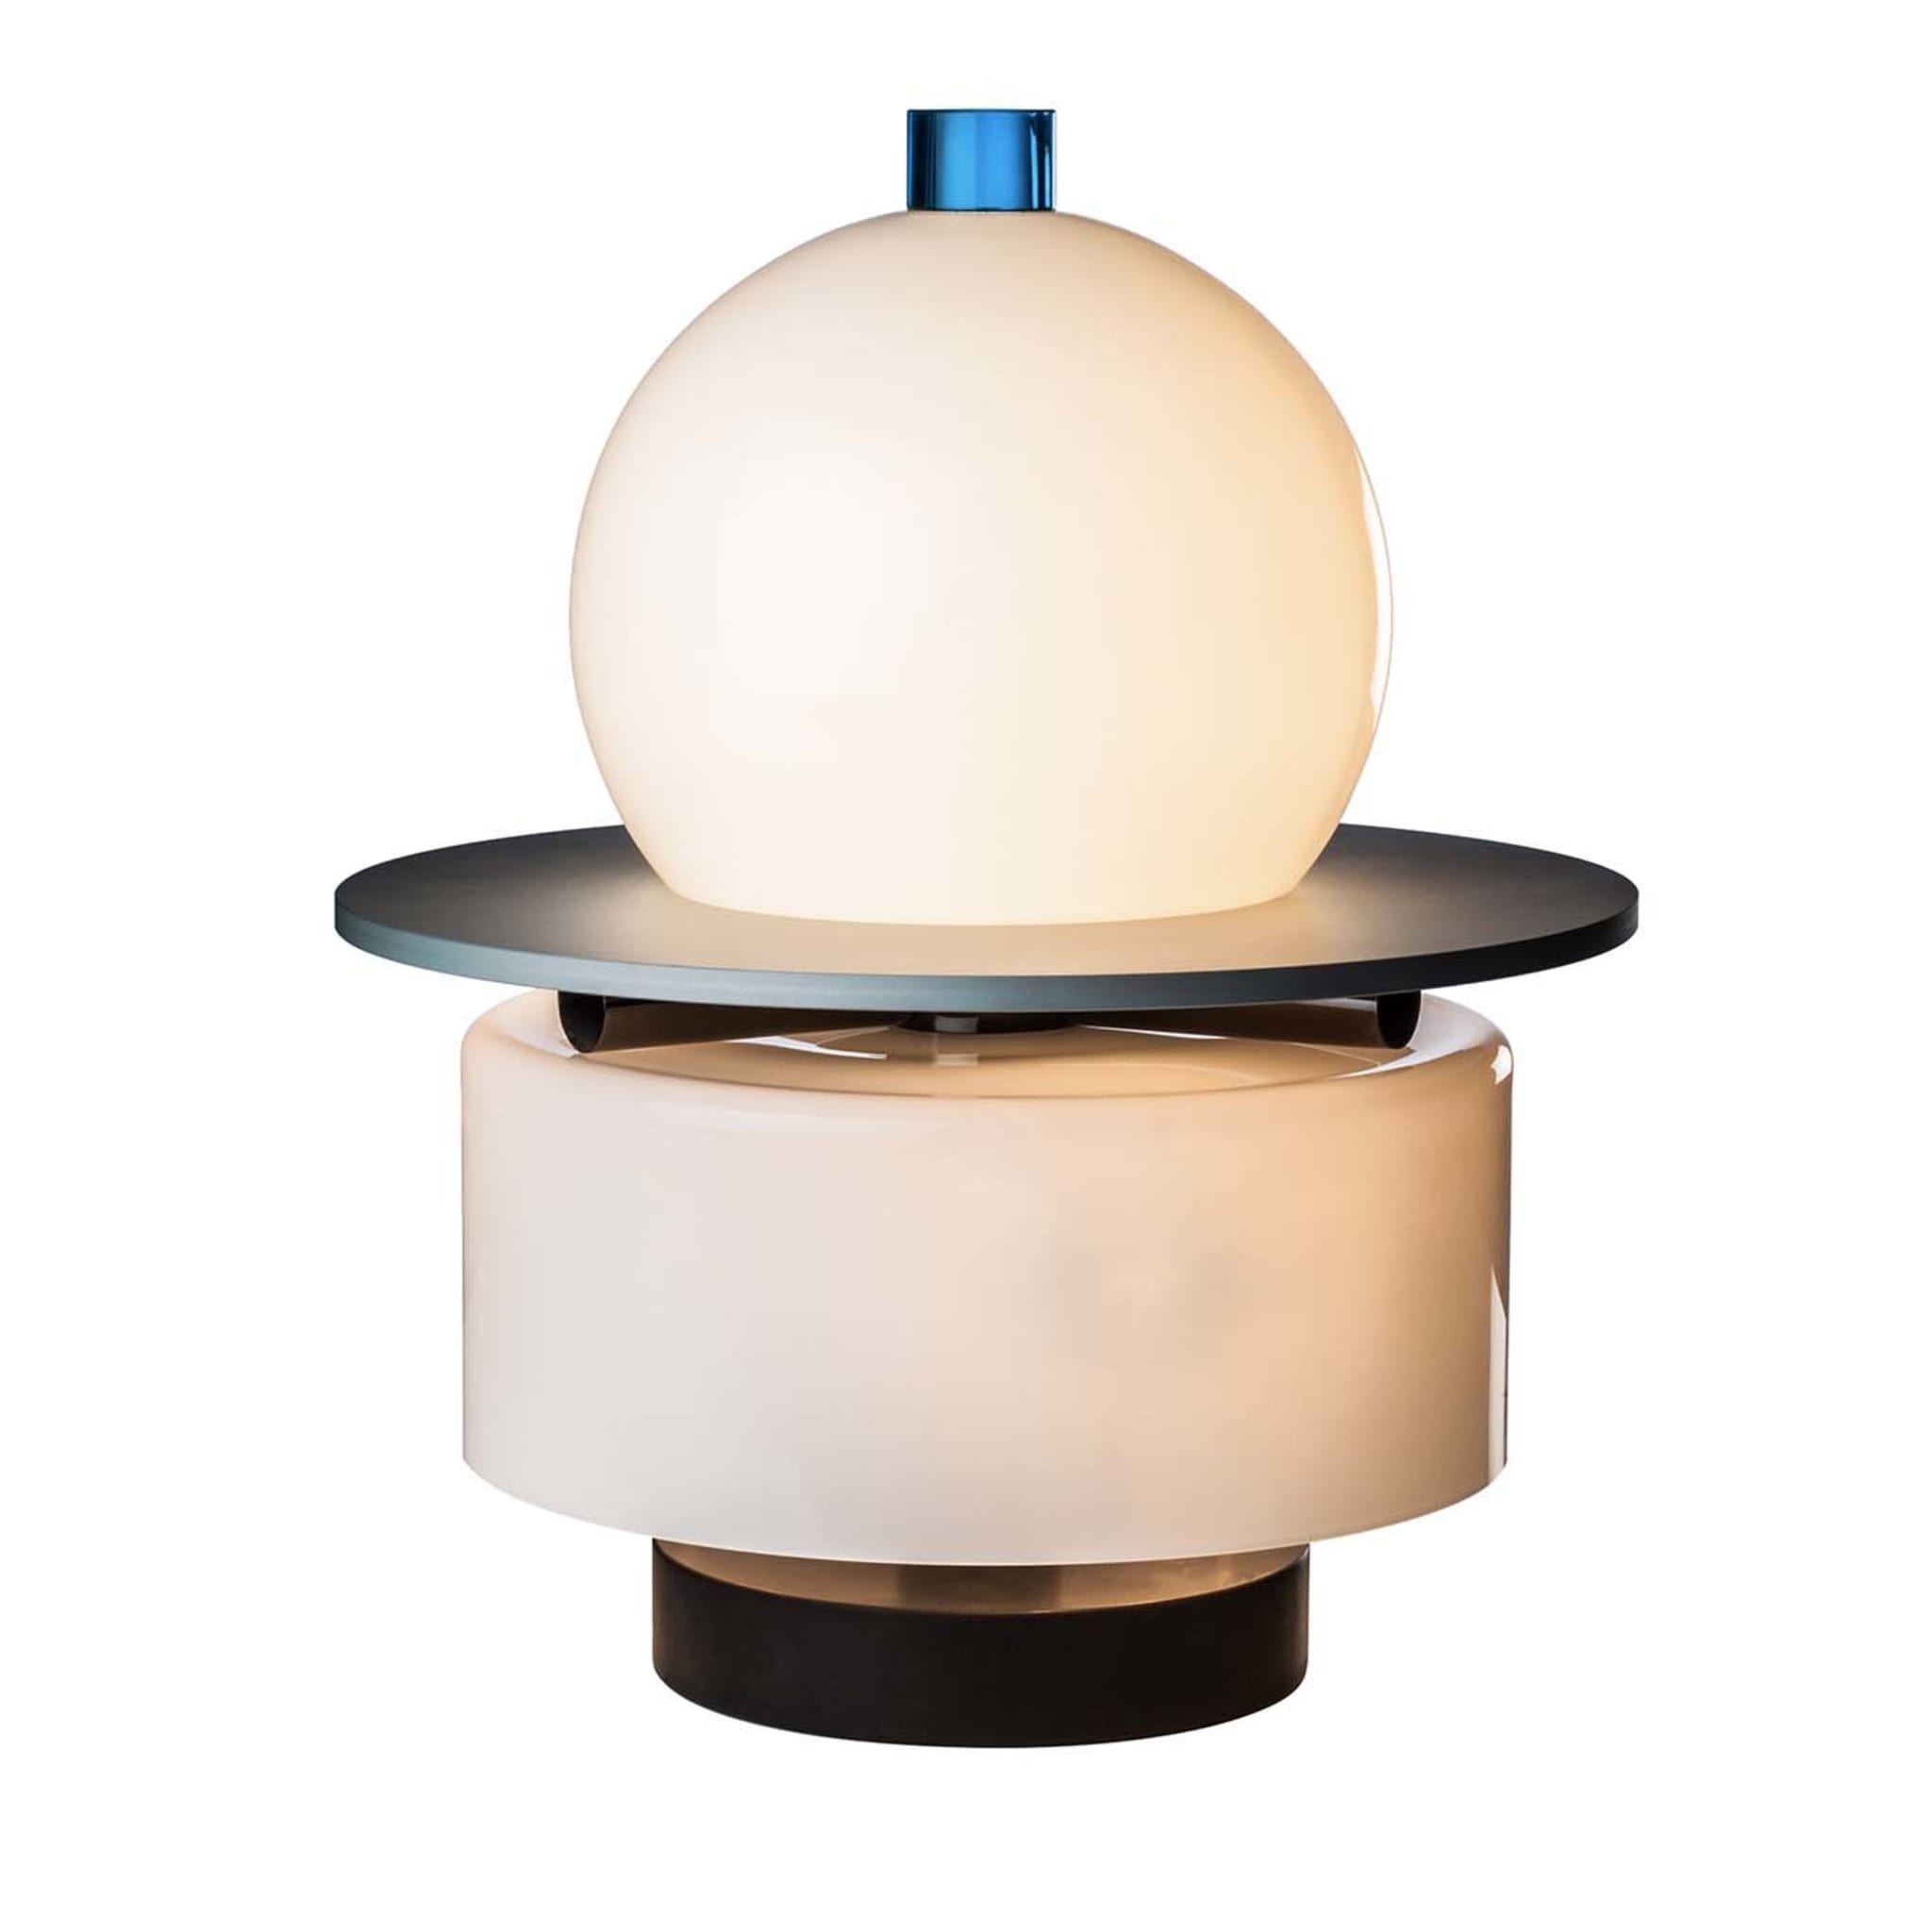 Kiritam Table Lamp by Ettore Sottsass - Main view